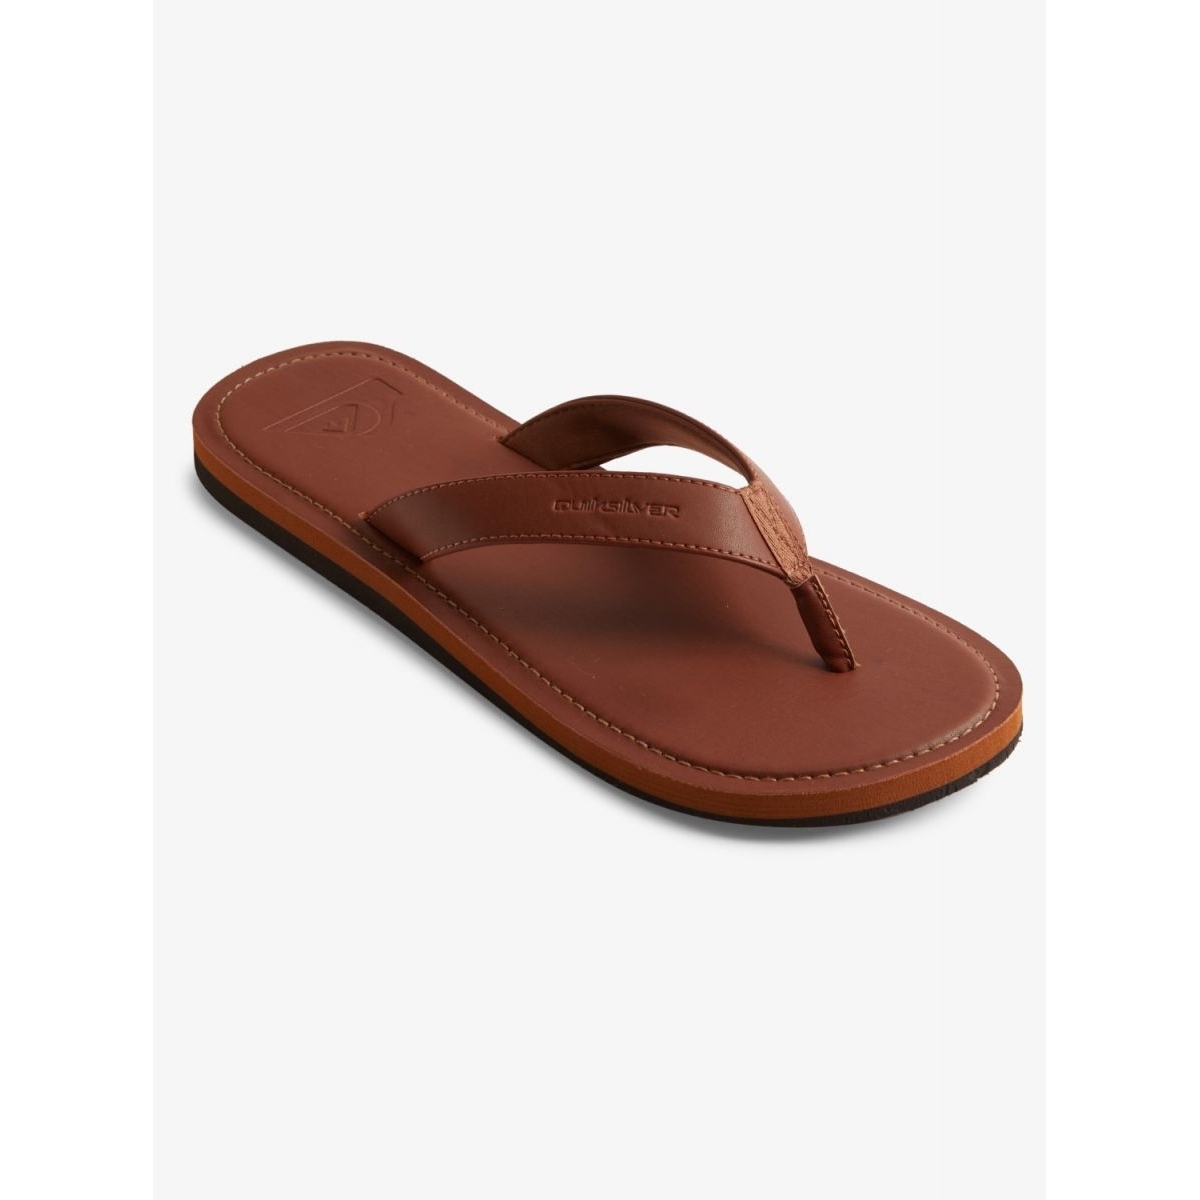 Quiksilver Men's Molokai Nubuck Flip Flop Sandals Tan Solid - AQYL100960-TKD0 TAN SOLID - TAN SOLID, 11